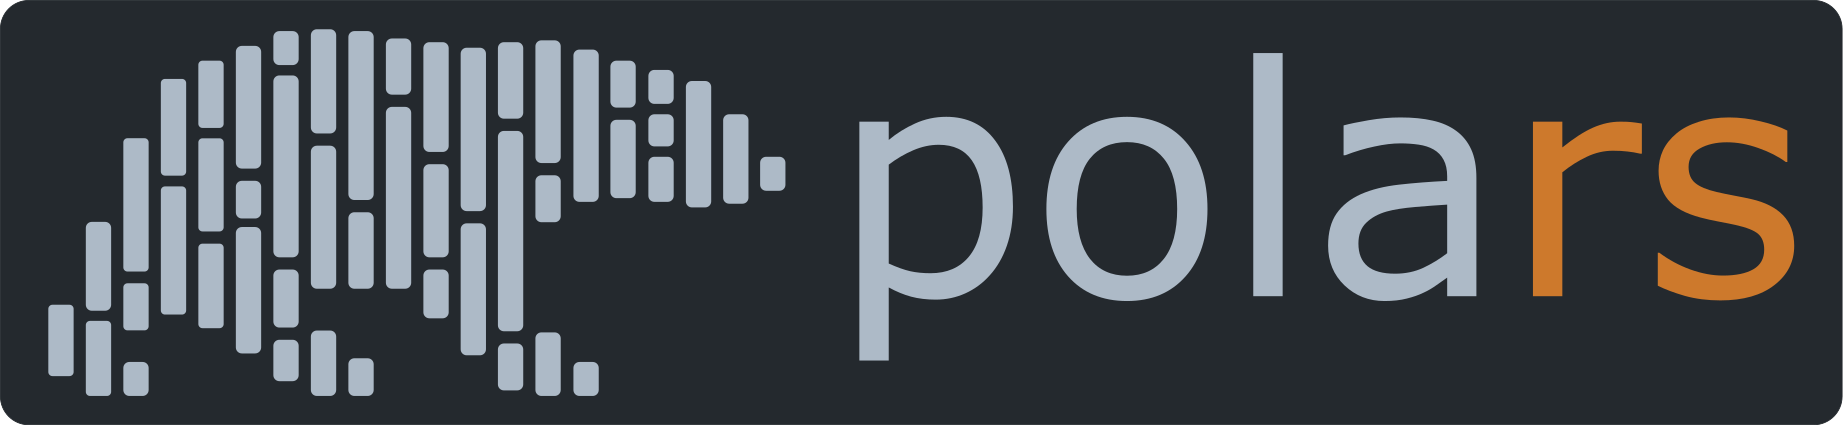 polars_github_logo_rect_dark_name.png